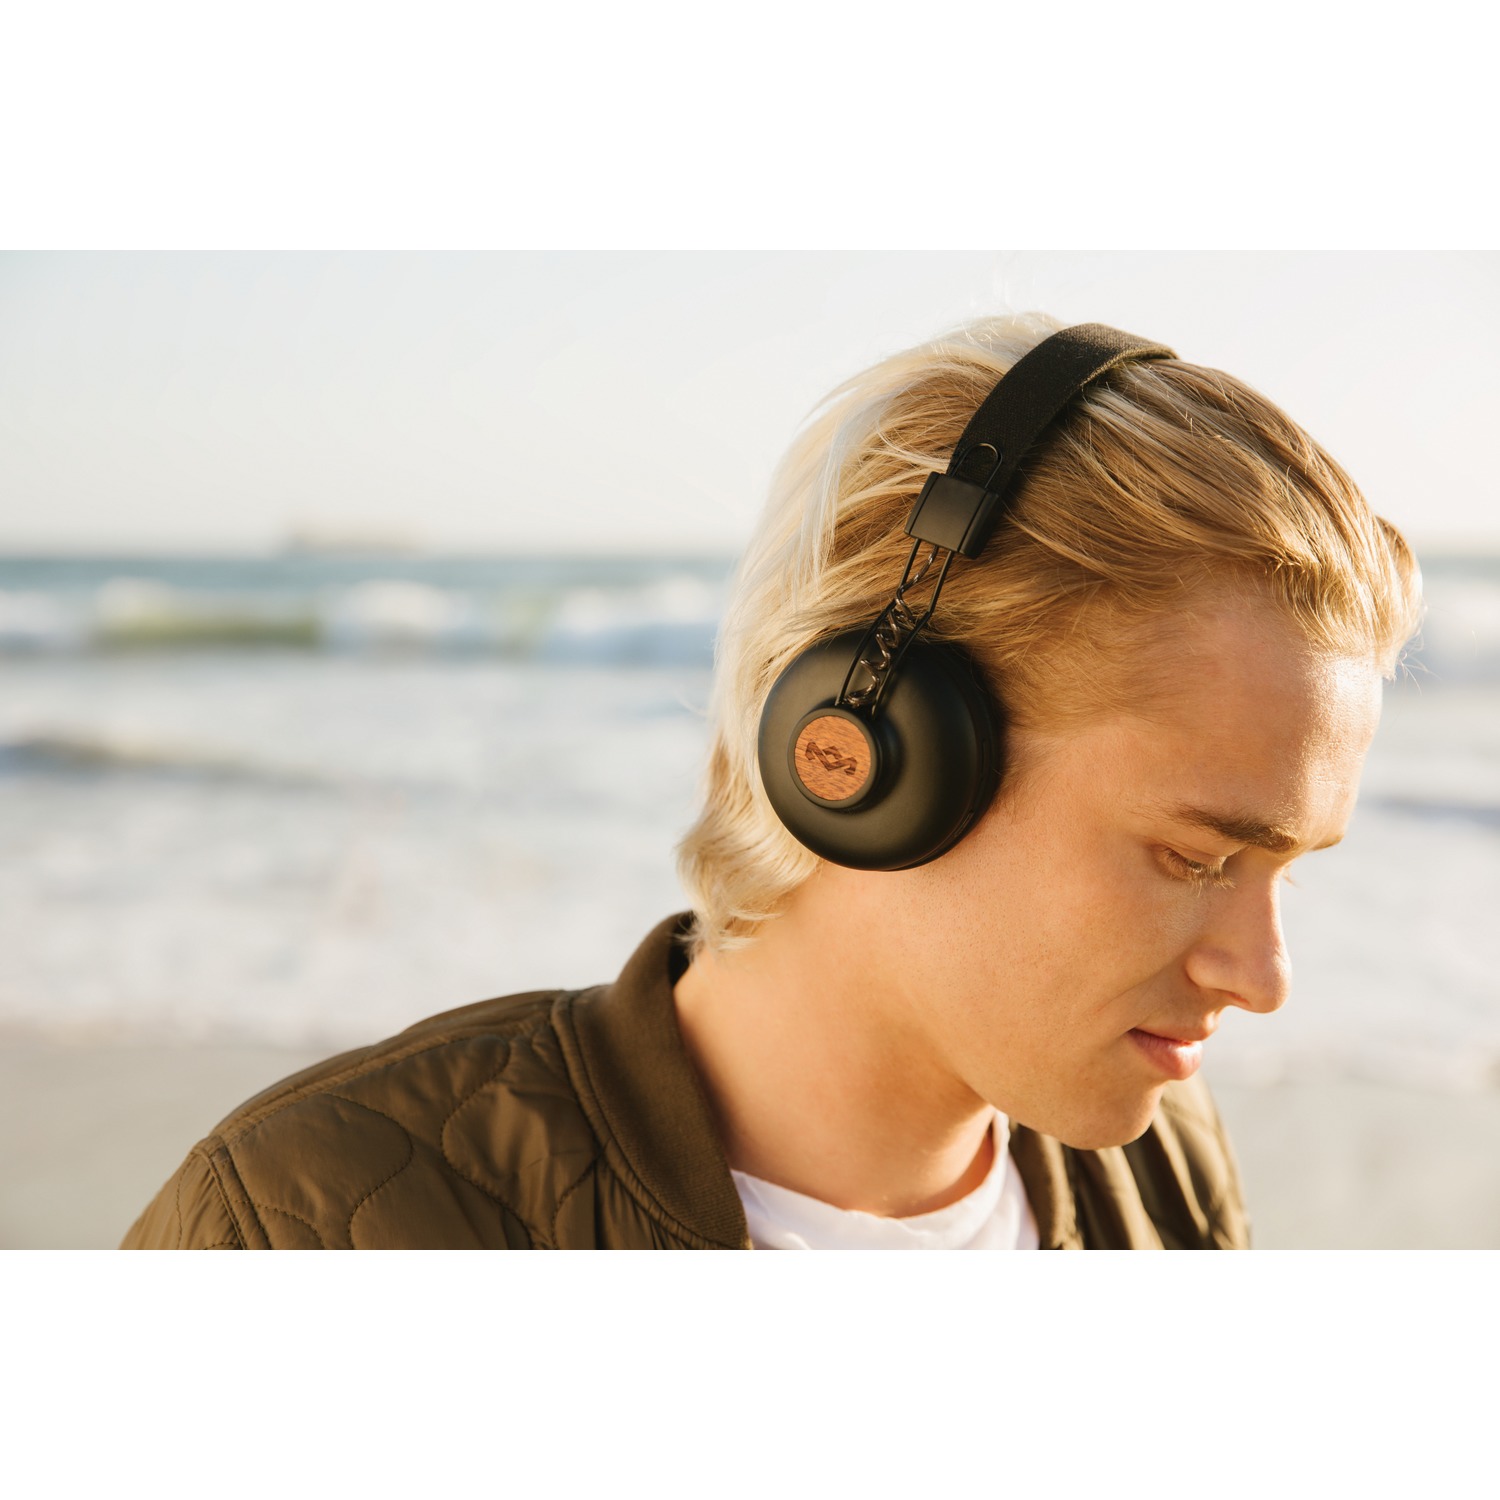 Marley EM-JH133-SB Positive Vibration 2 Wireless Bluetooth on Ear Headphones - Black - image 6 of 10